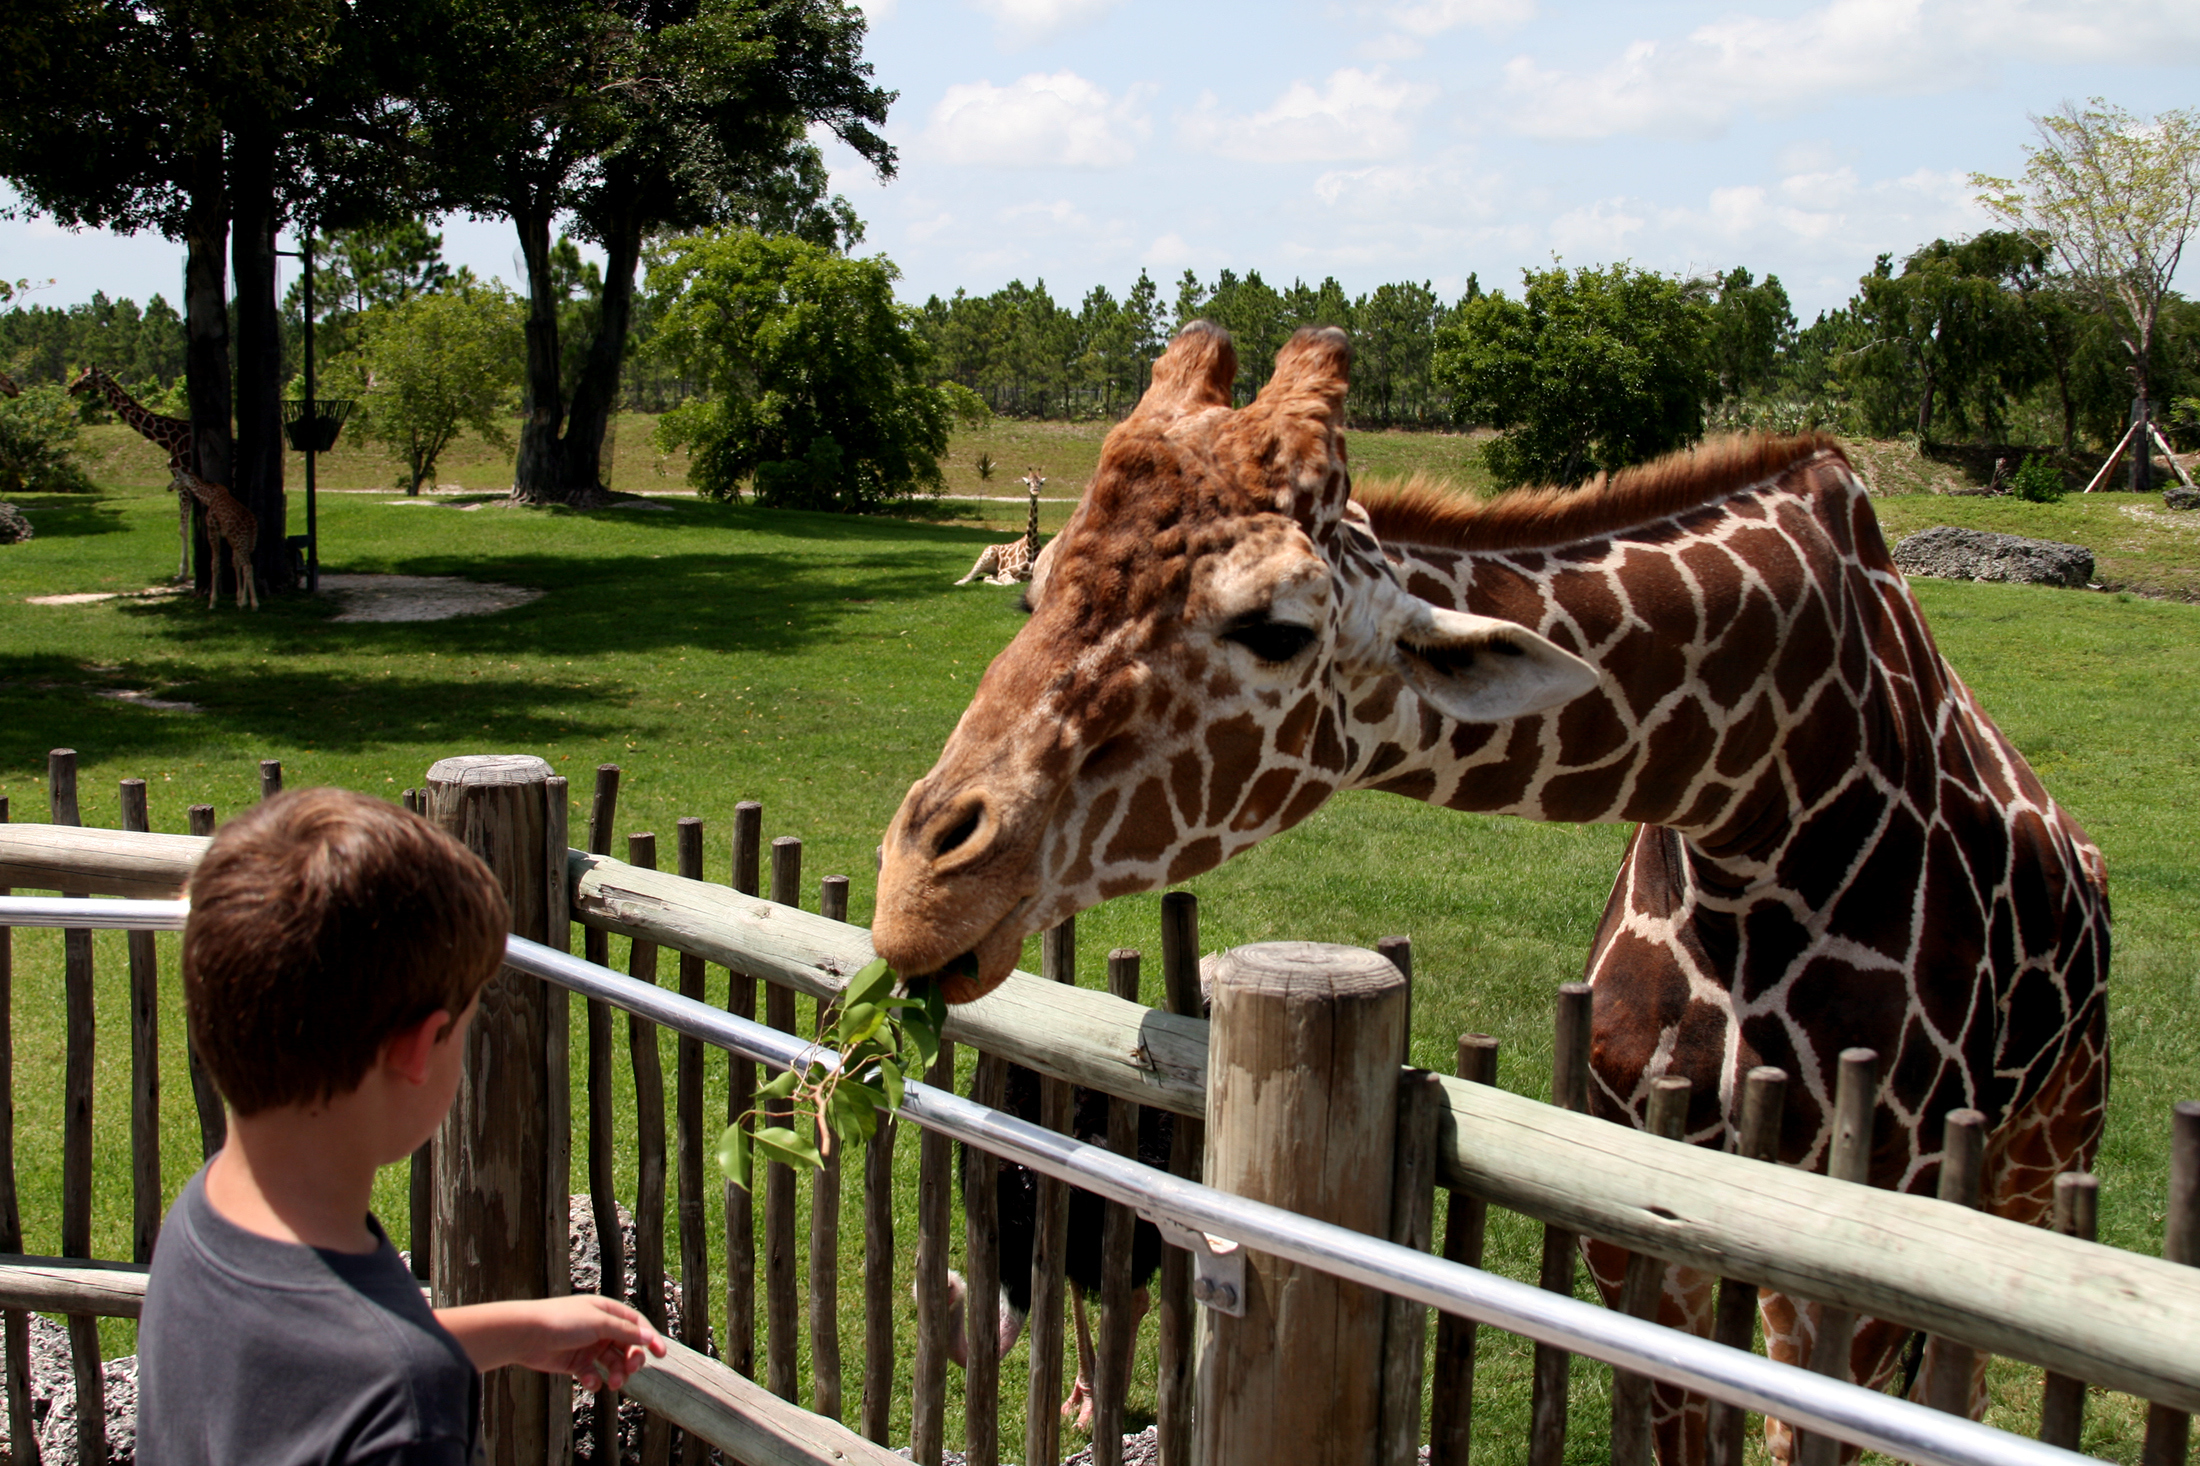 A young boy feeding leaves to a giraffe 